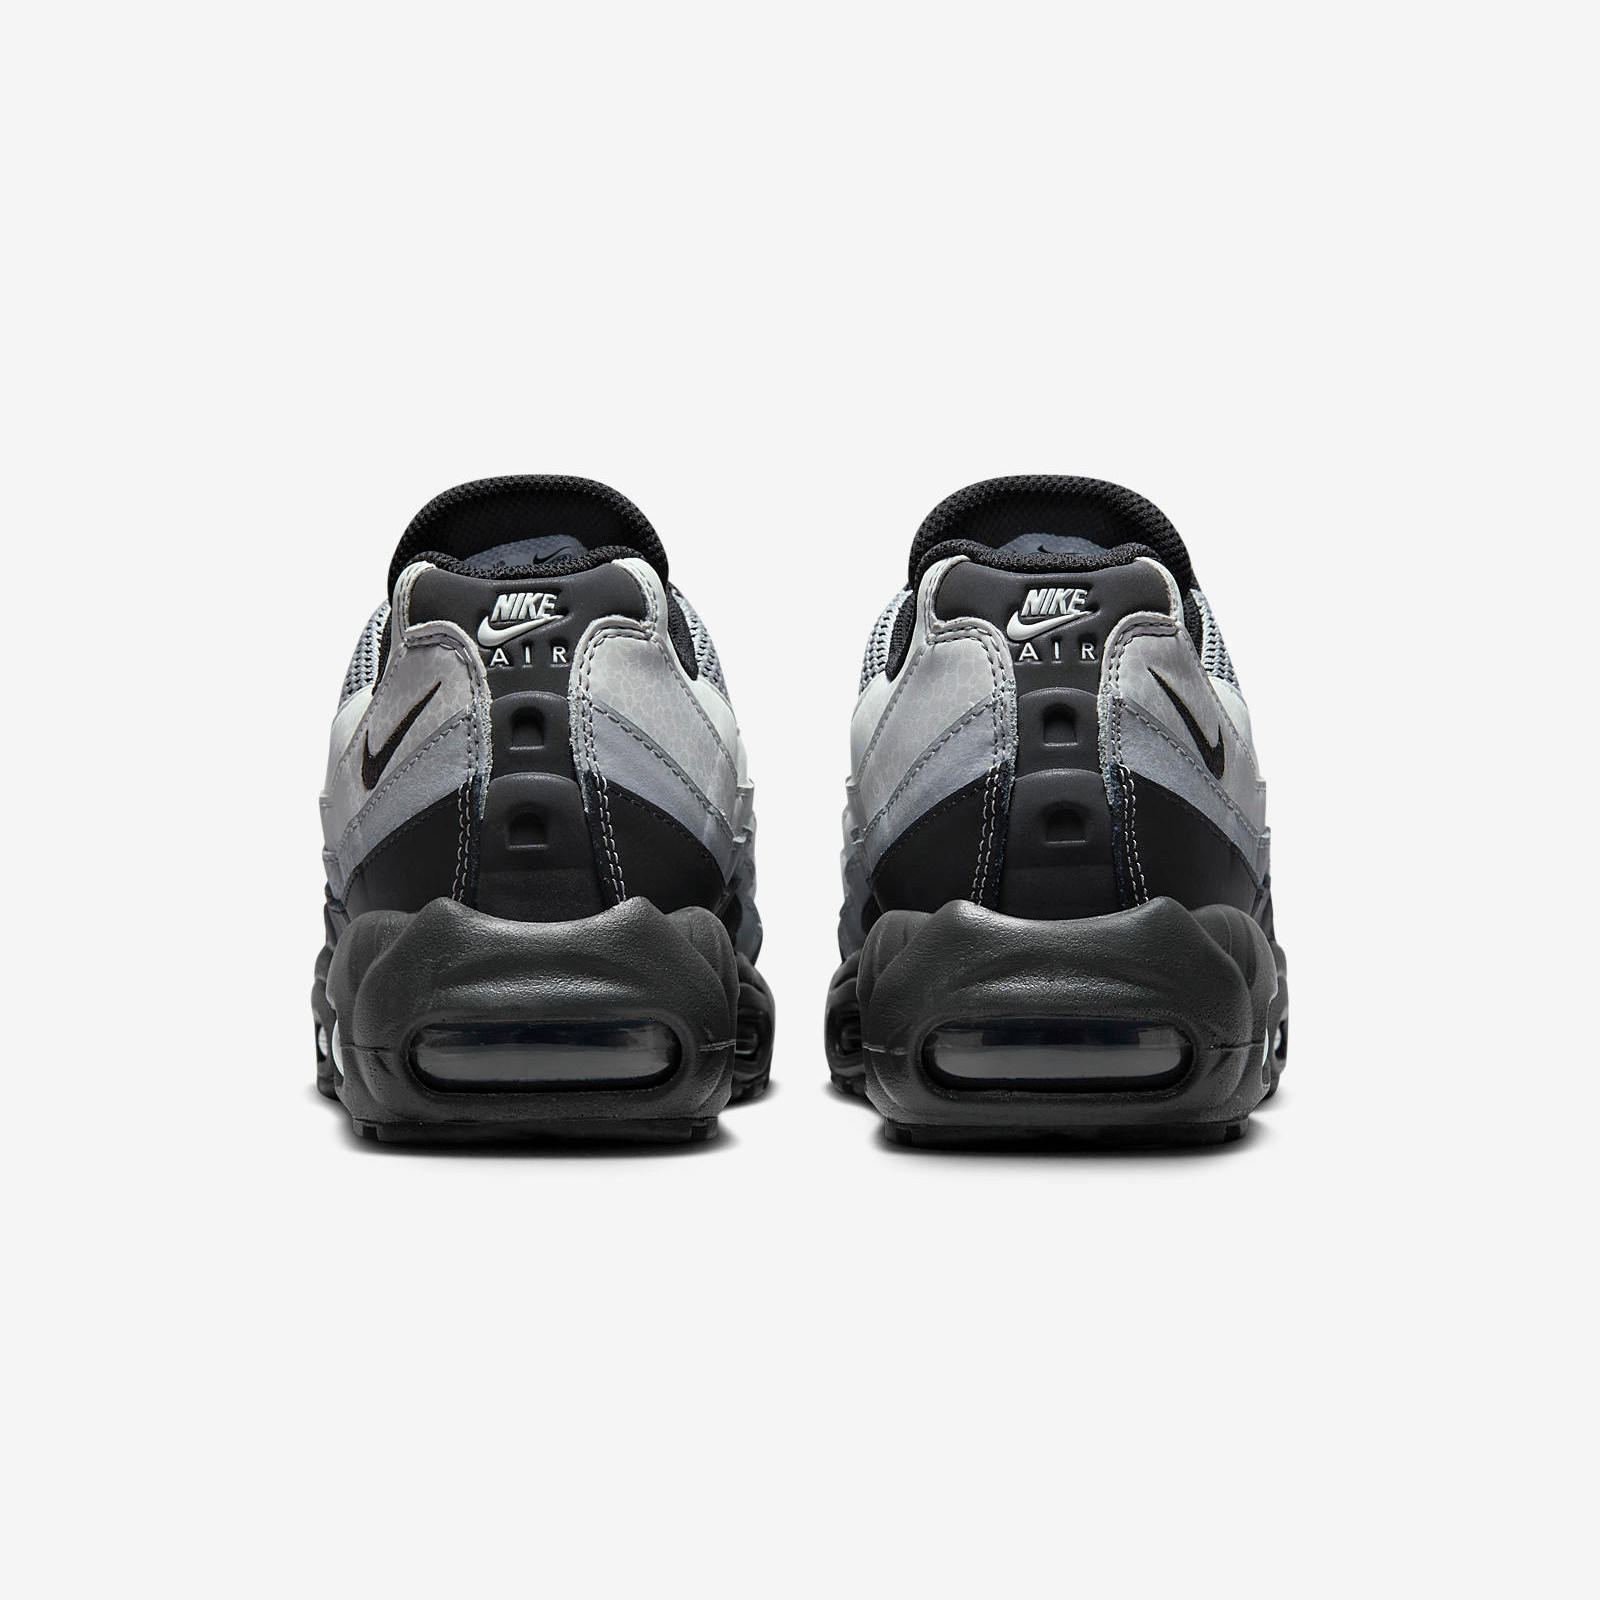 Nike Air Max 95
« Light Smoke Grey »